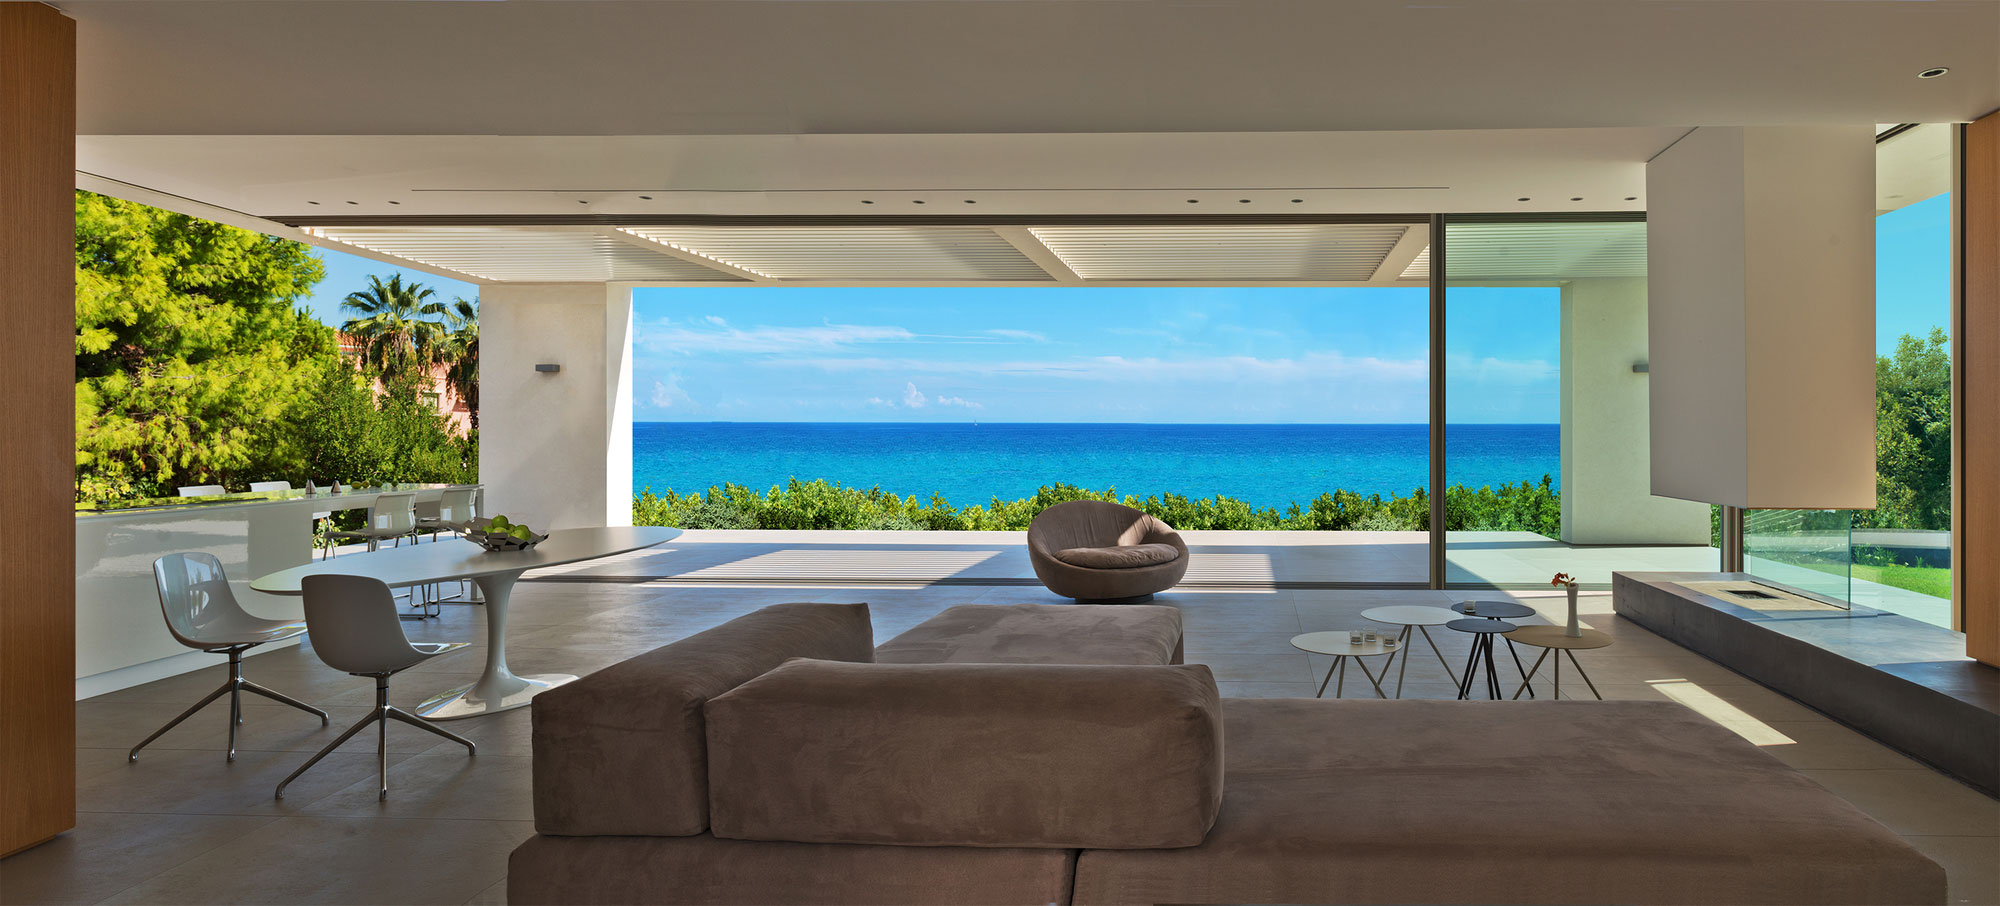 Lombok Architect - Stylish Modern Mediterranean Villa with Ocean View Picture 9